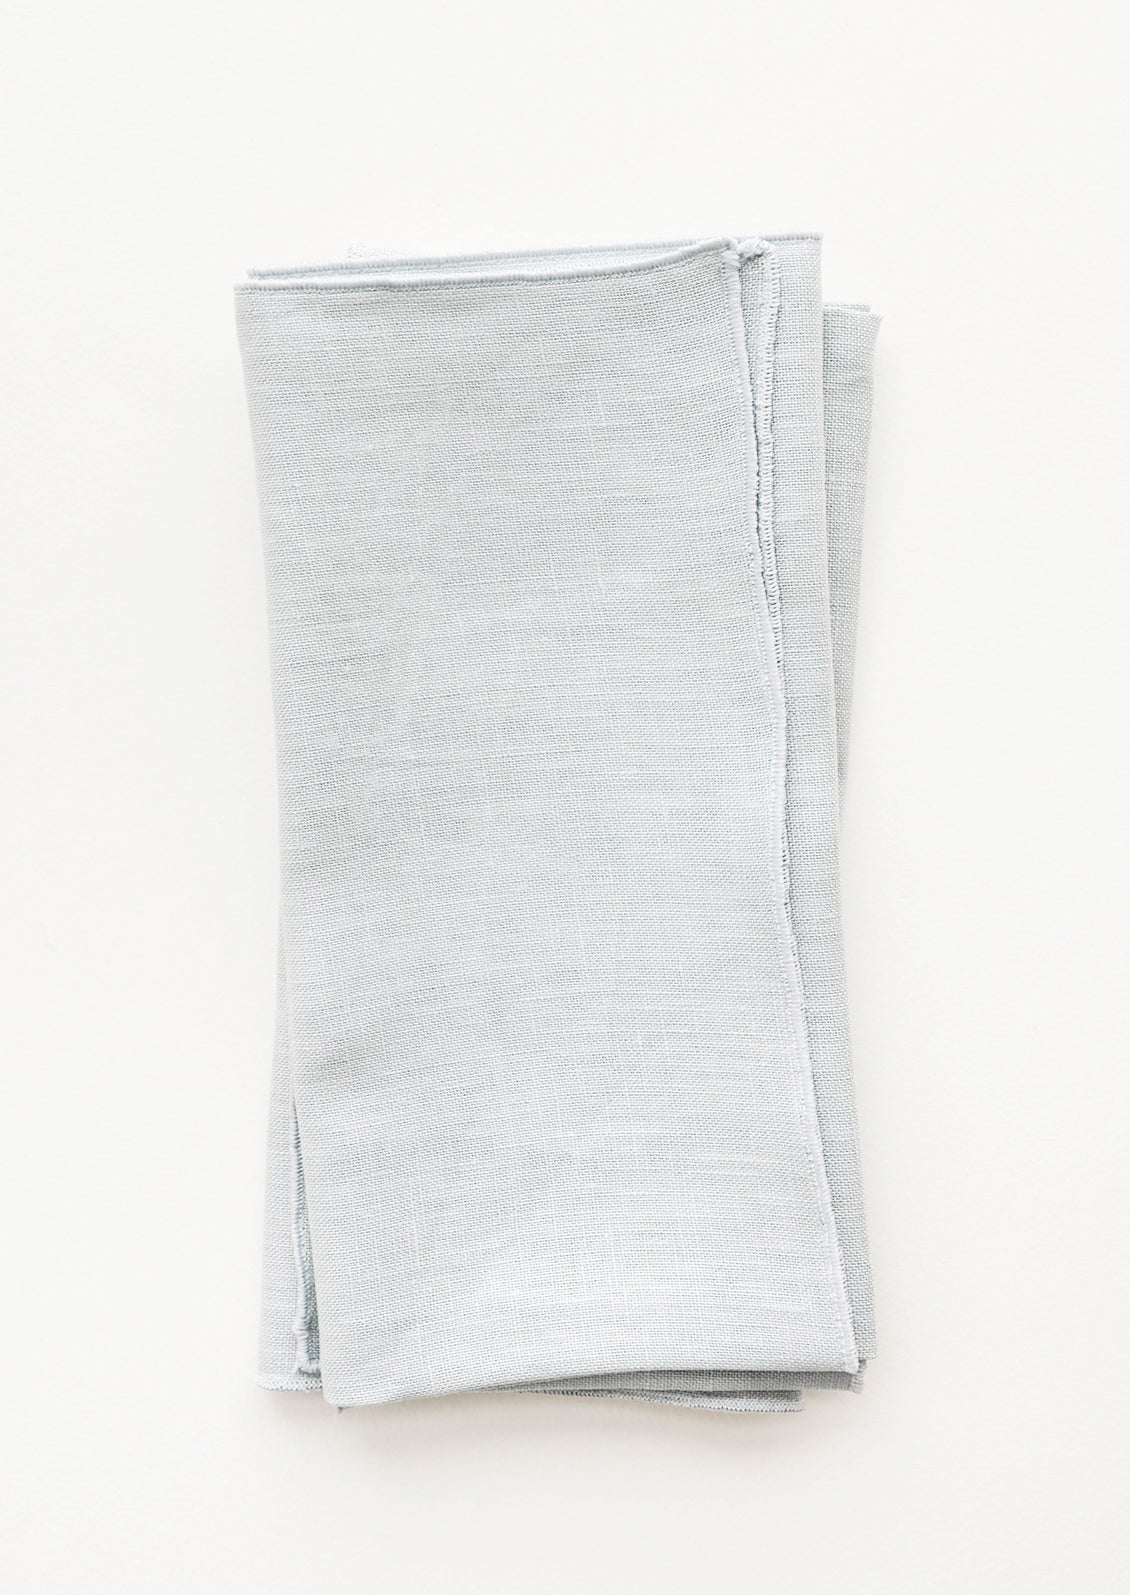 Pair of folded Linen Napkins in Misty Blue.